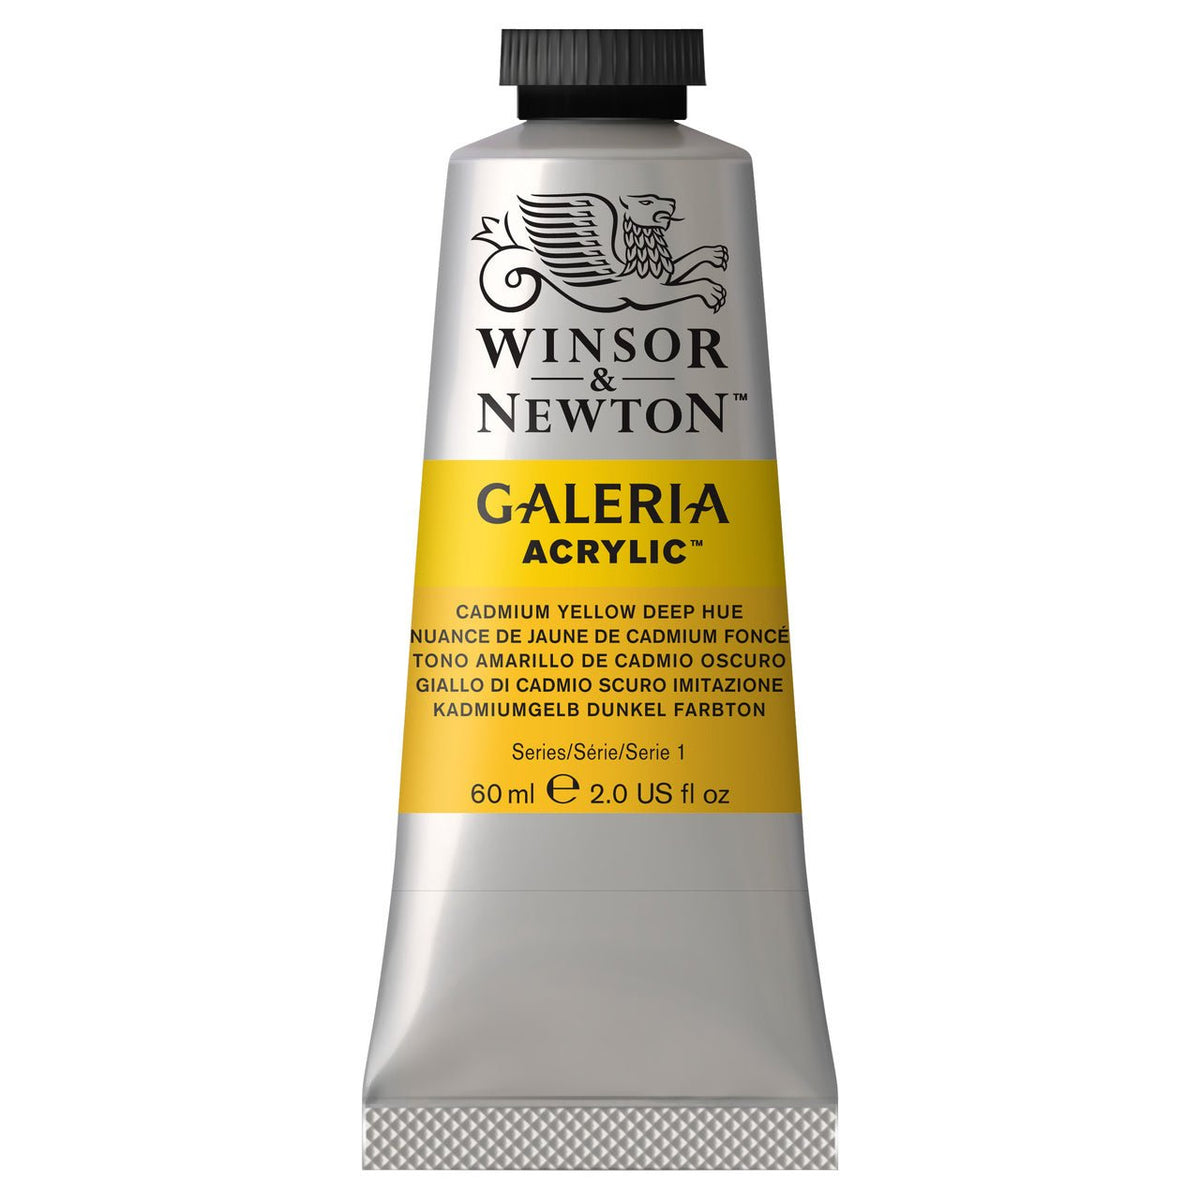 Winsor & Newton Galeria acrylic Cadmium Yellow Deep Hue 60 ml - merriartist.com